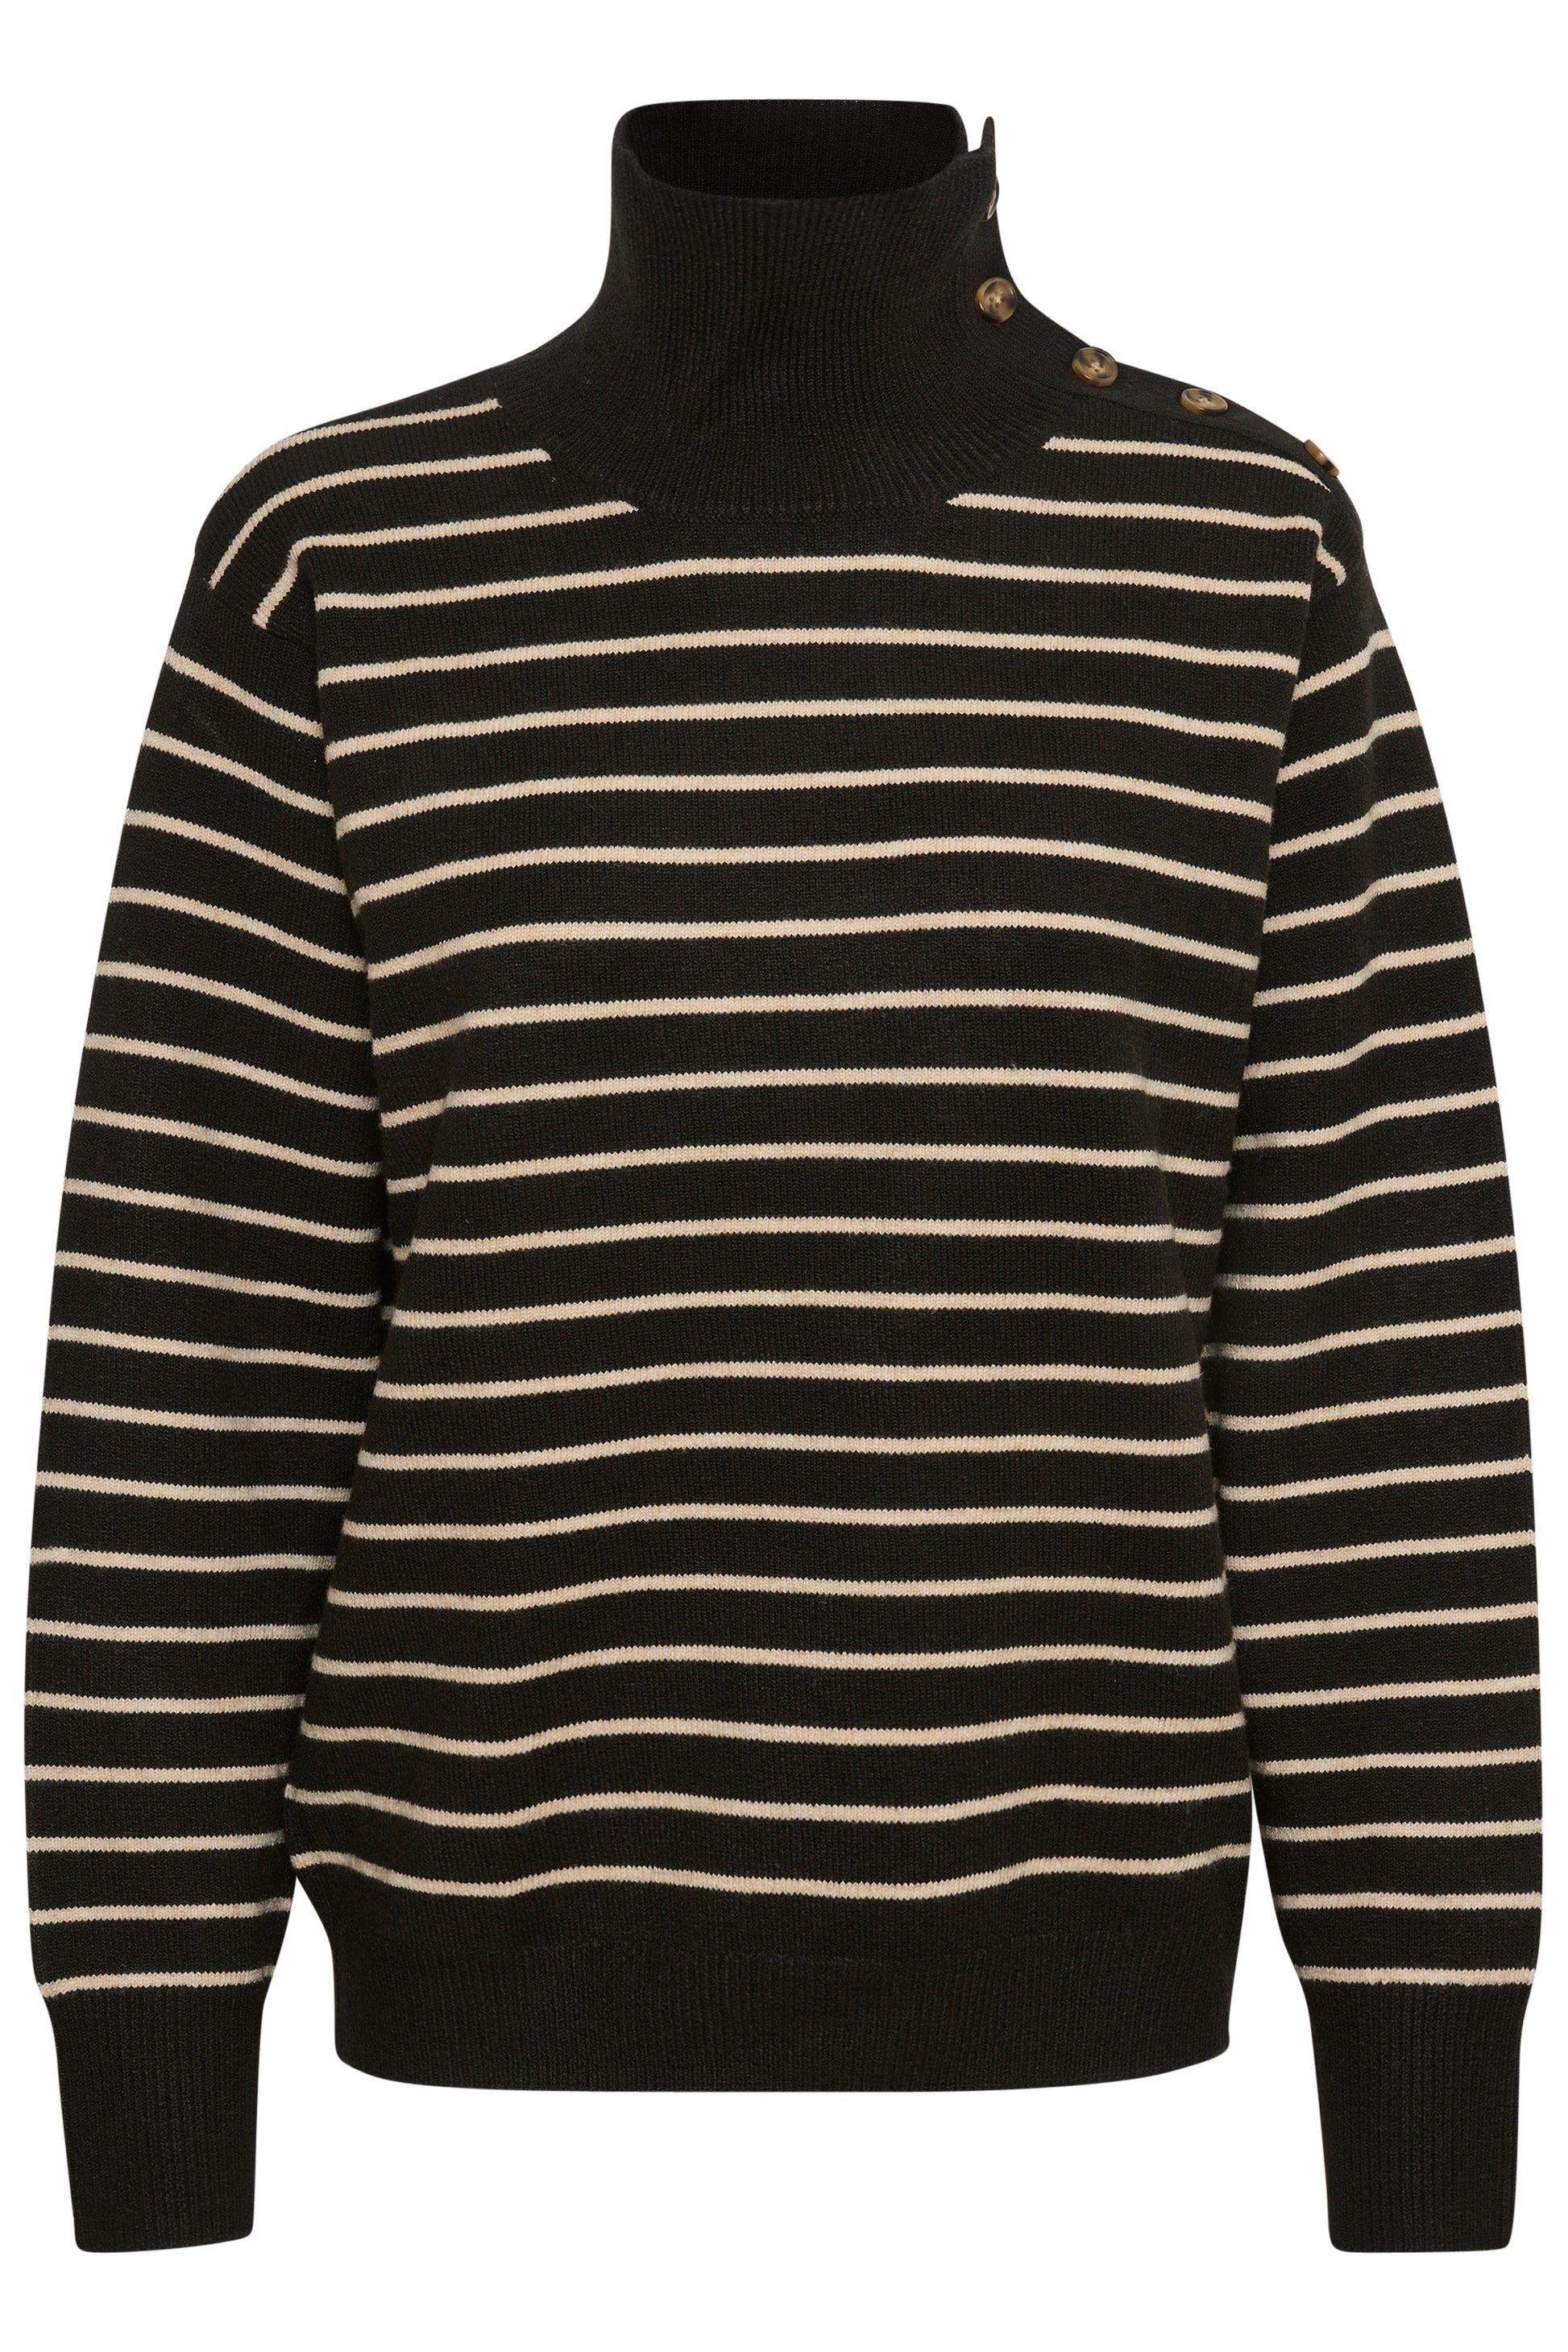  Lyrica Stripe Pullover LS  Black & Sandshell Stripe